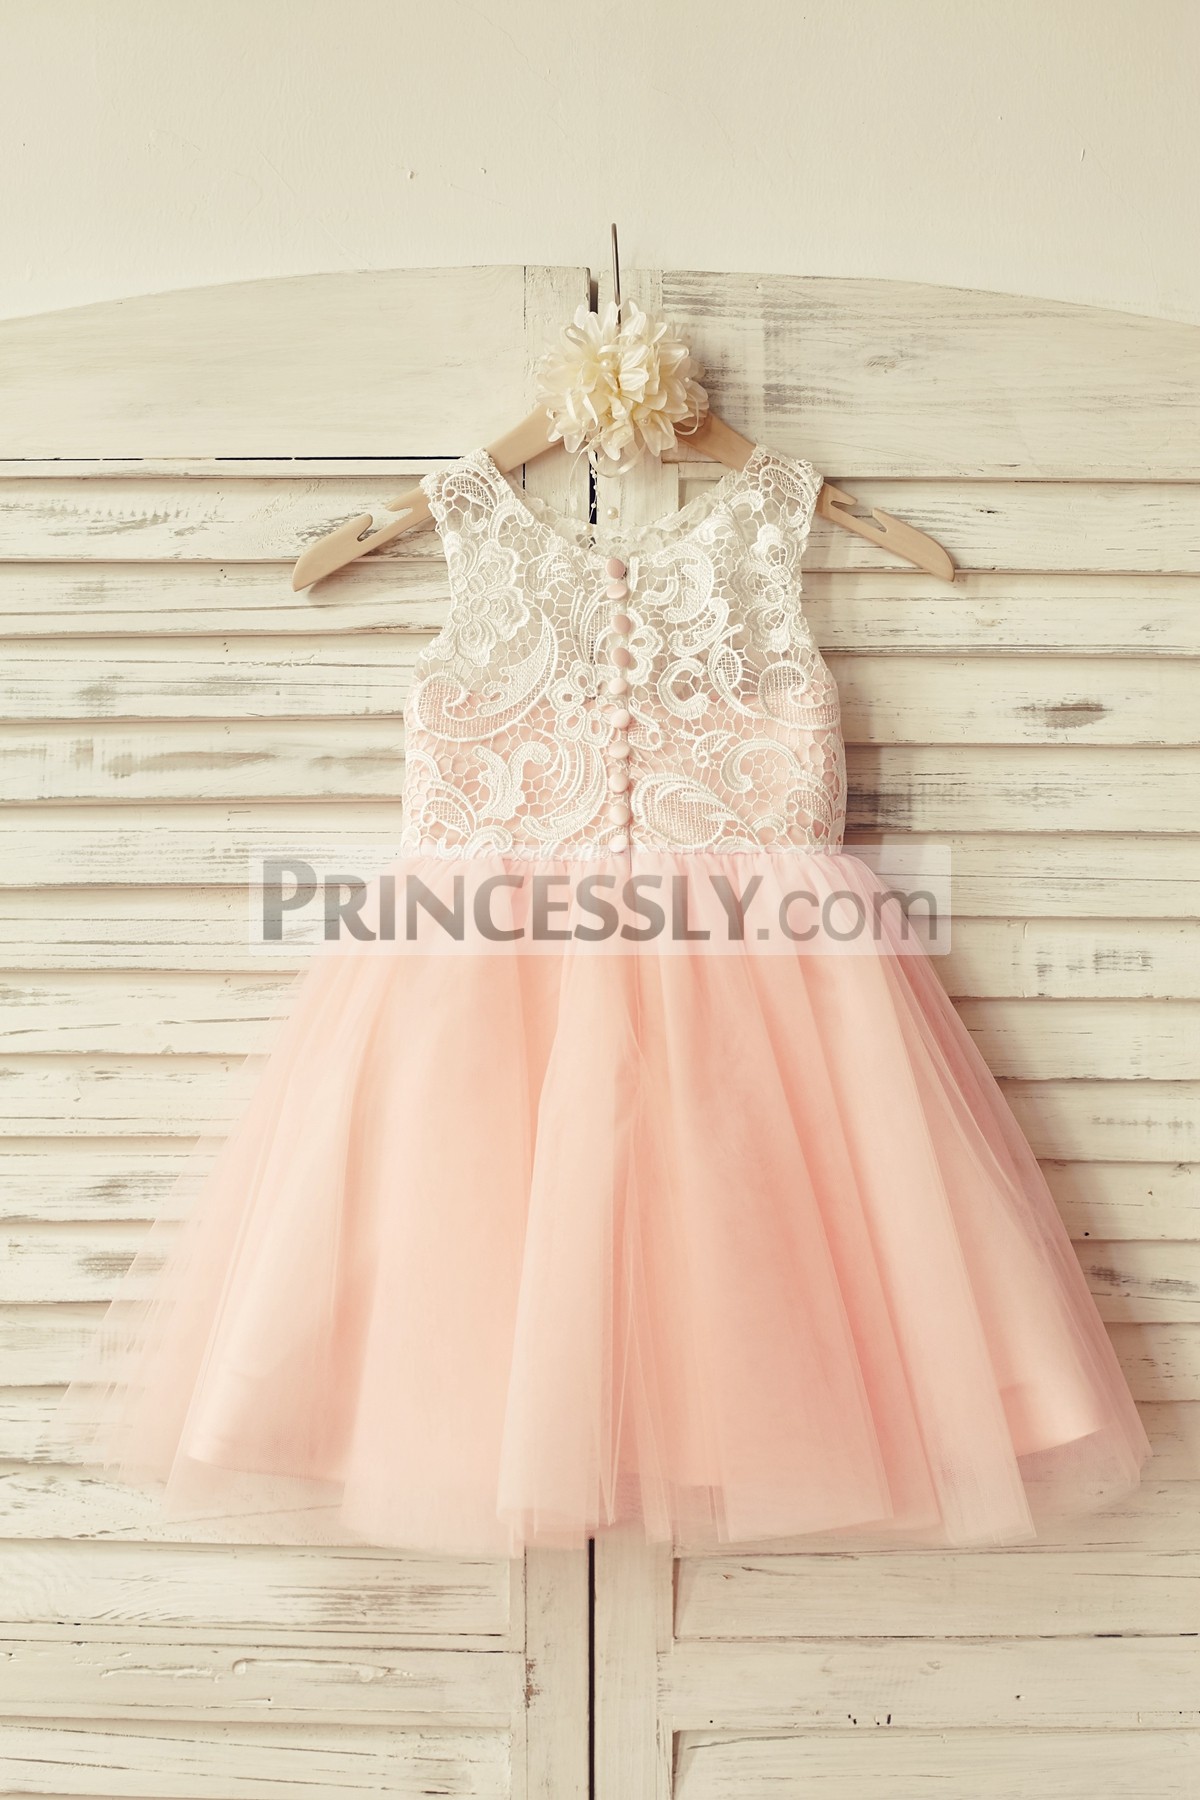 girls baby pink dress